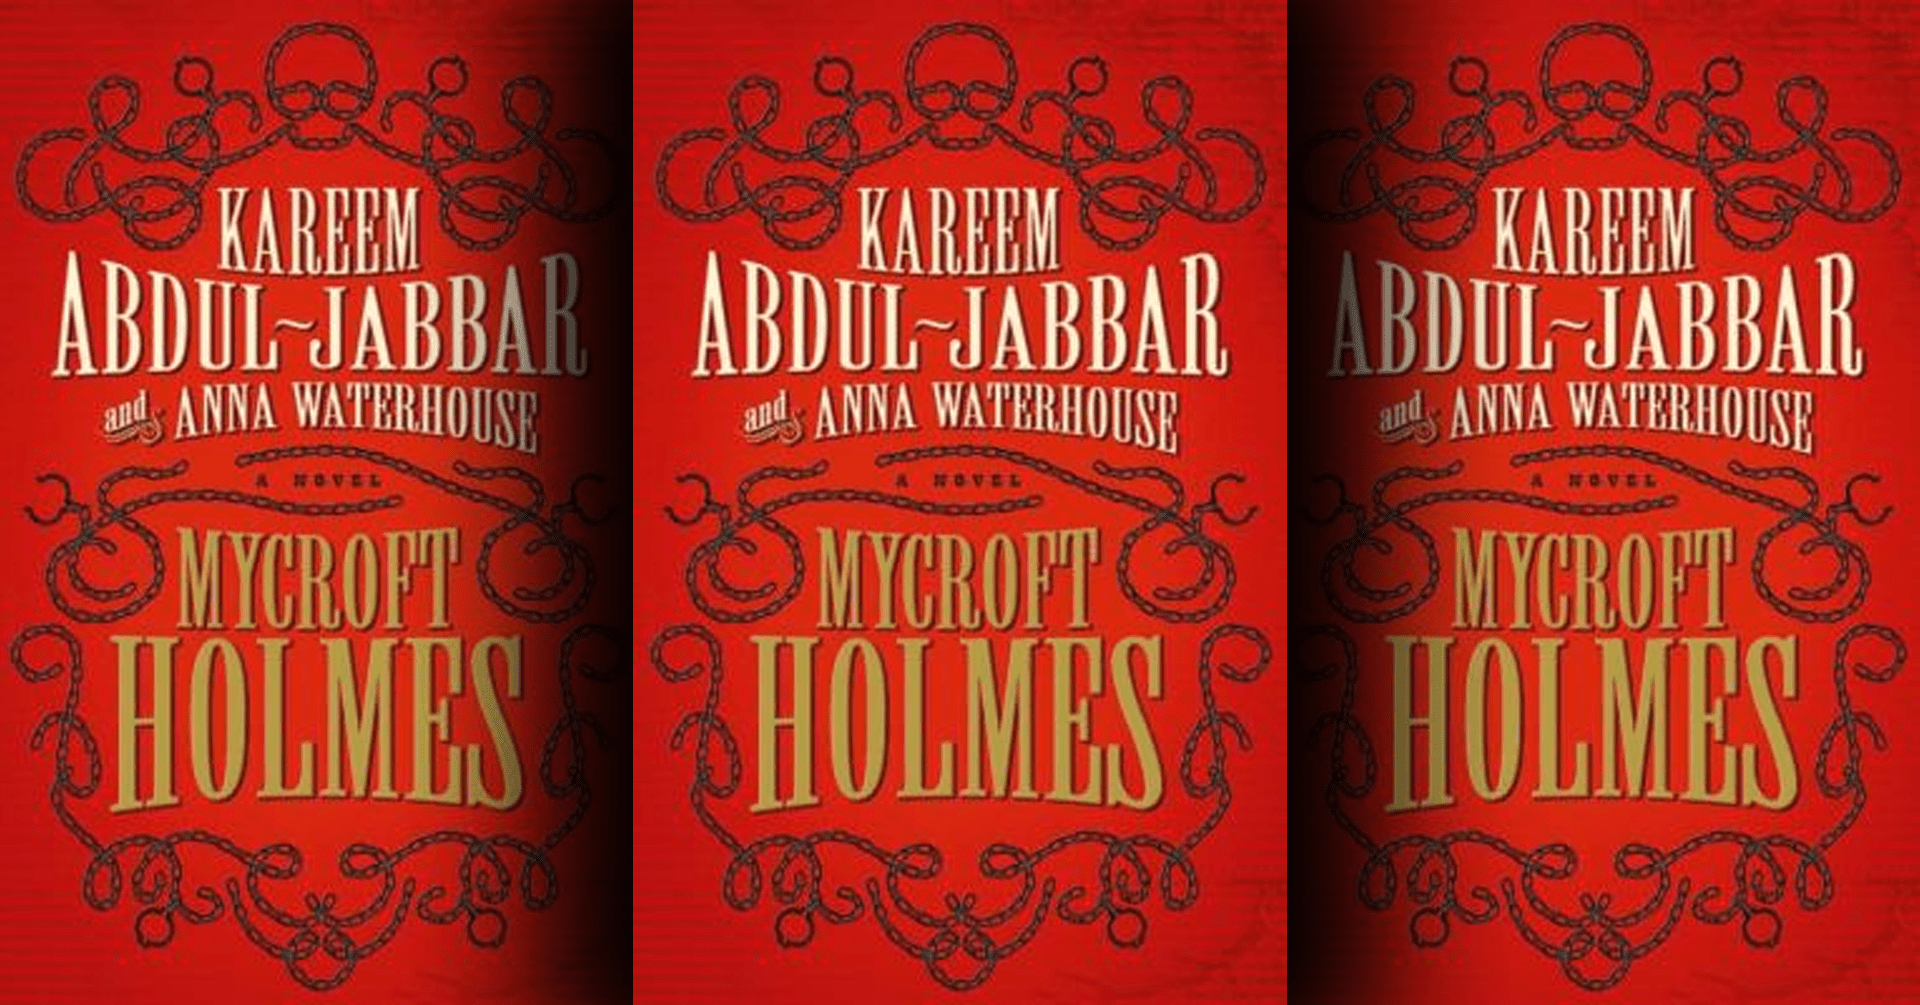 Mycroft Holmes by Kareem Abdul-Jabbar & Anna Waterhouse